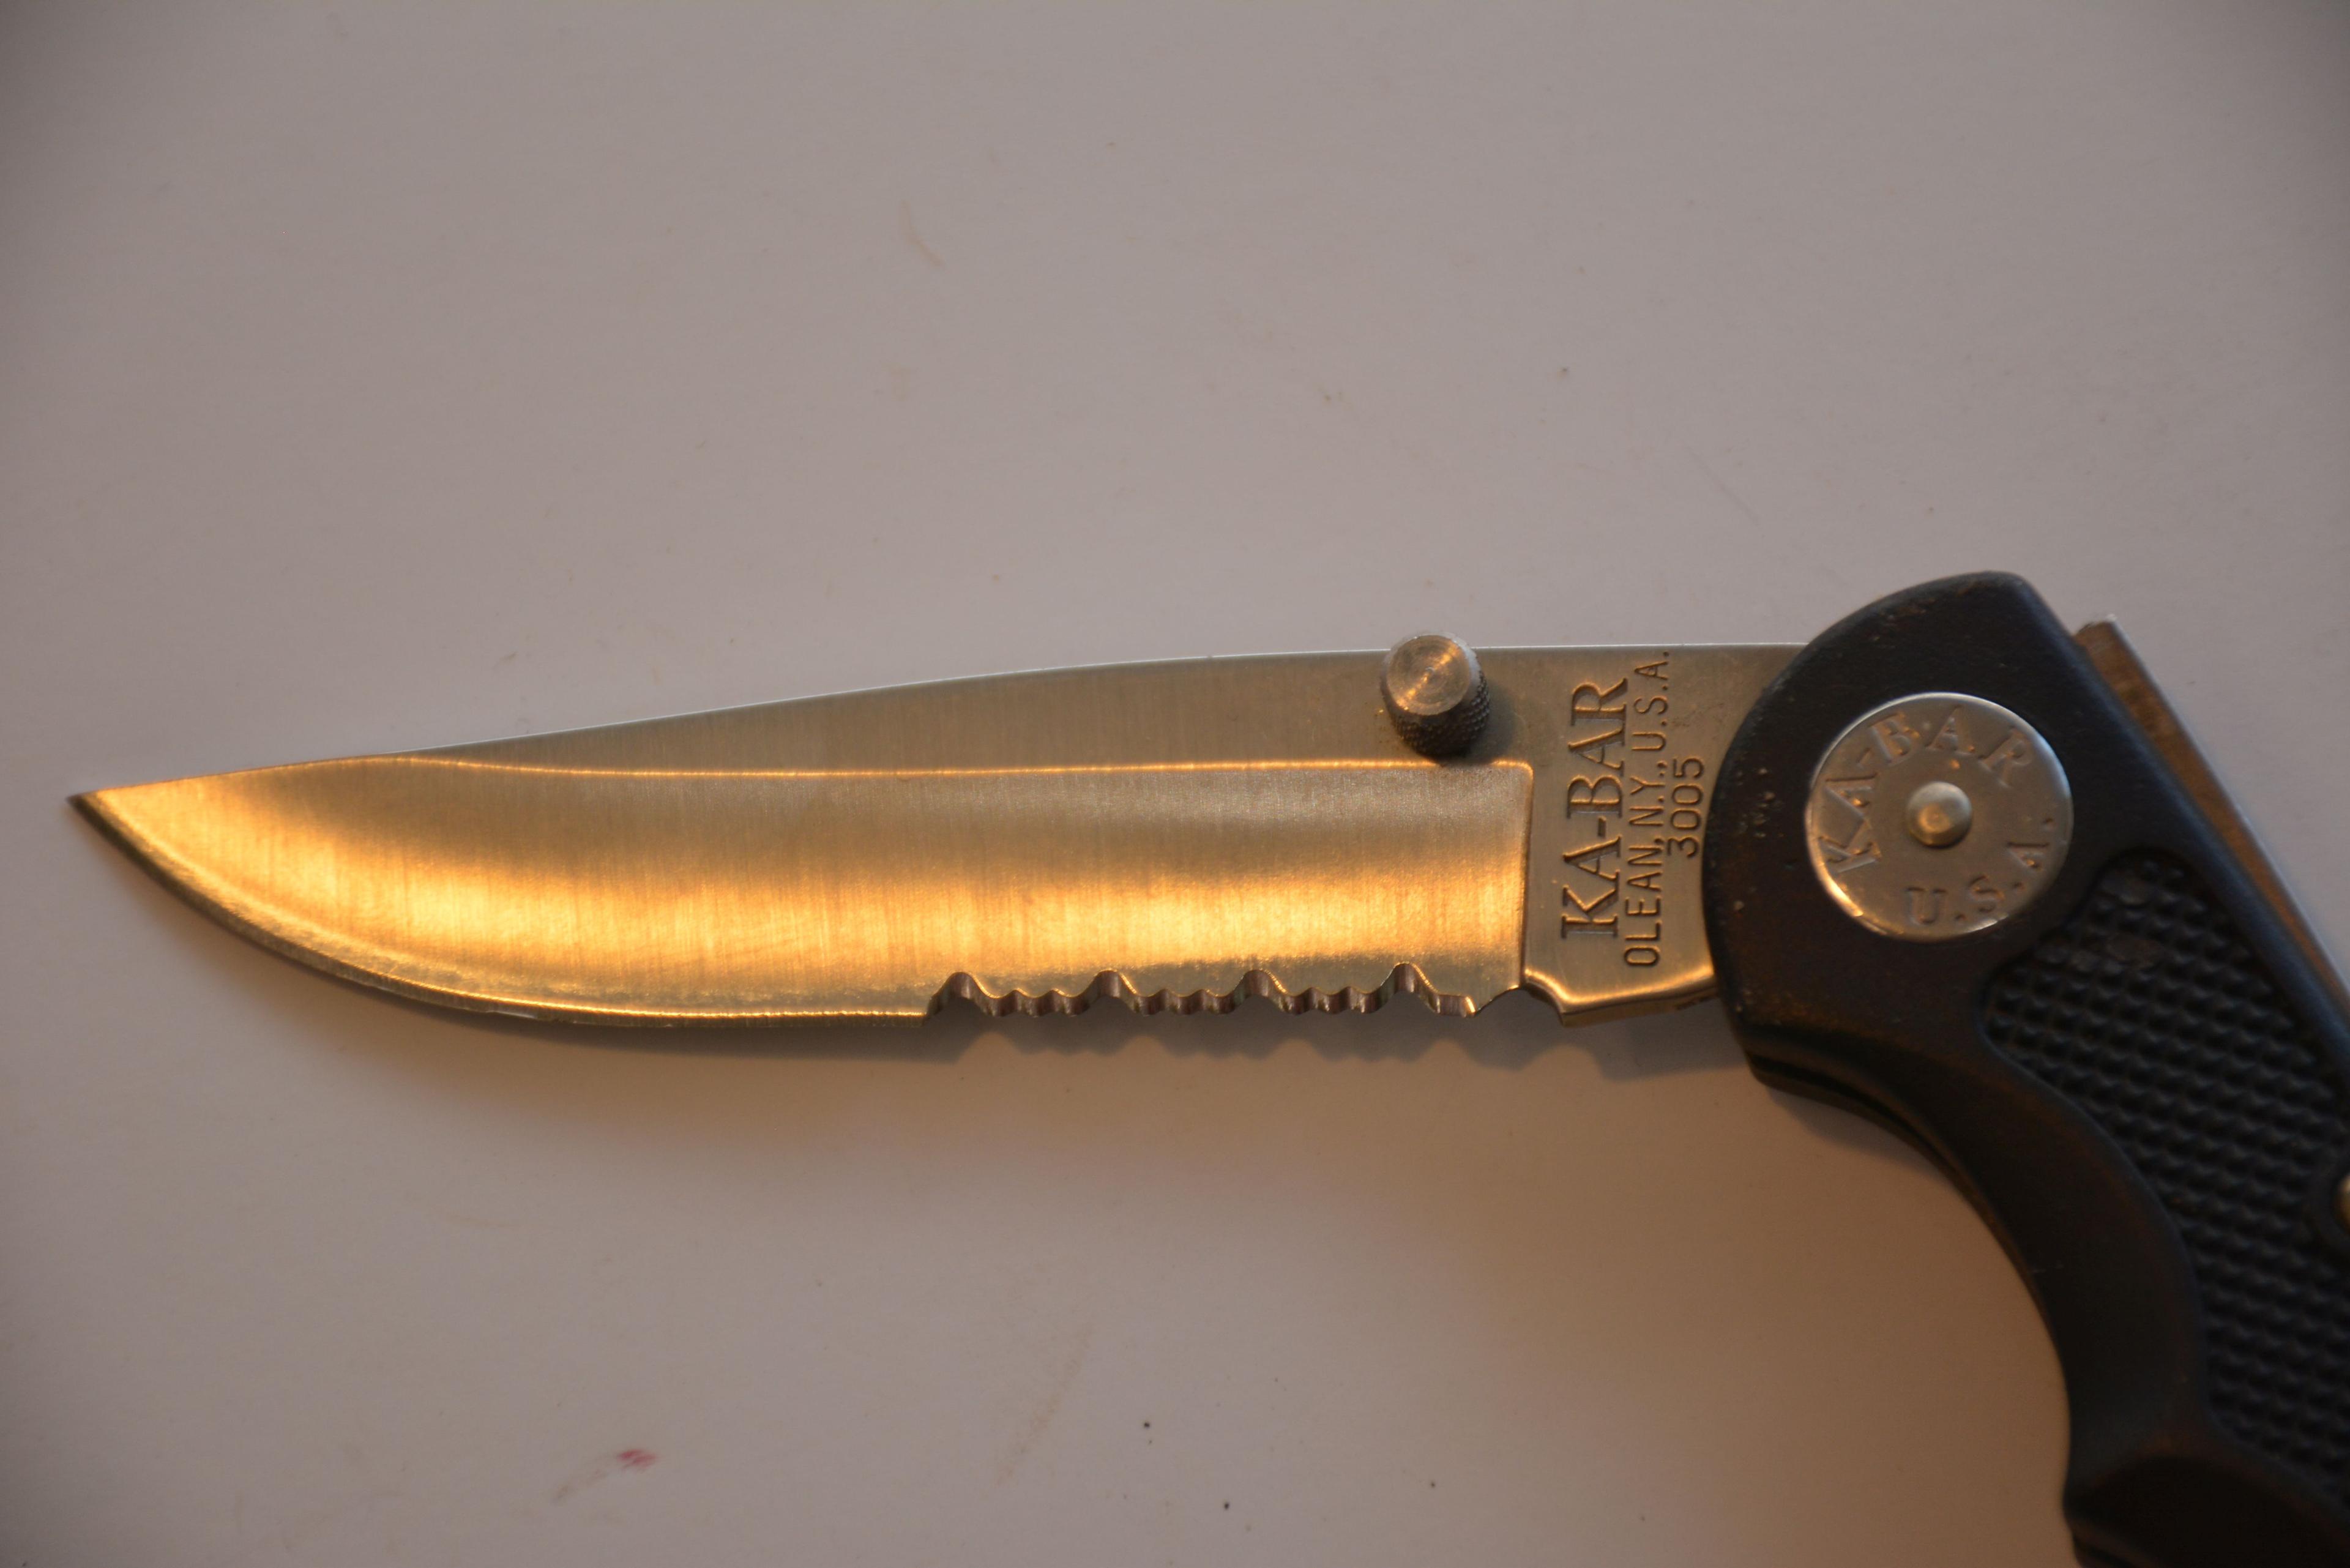 Ka-bar Pocket Knife - 4" Blade'